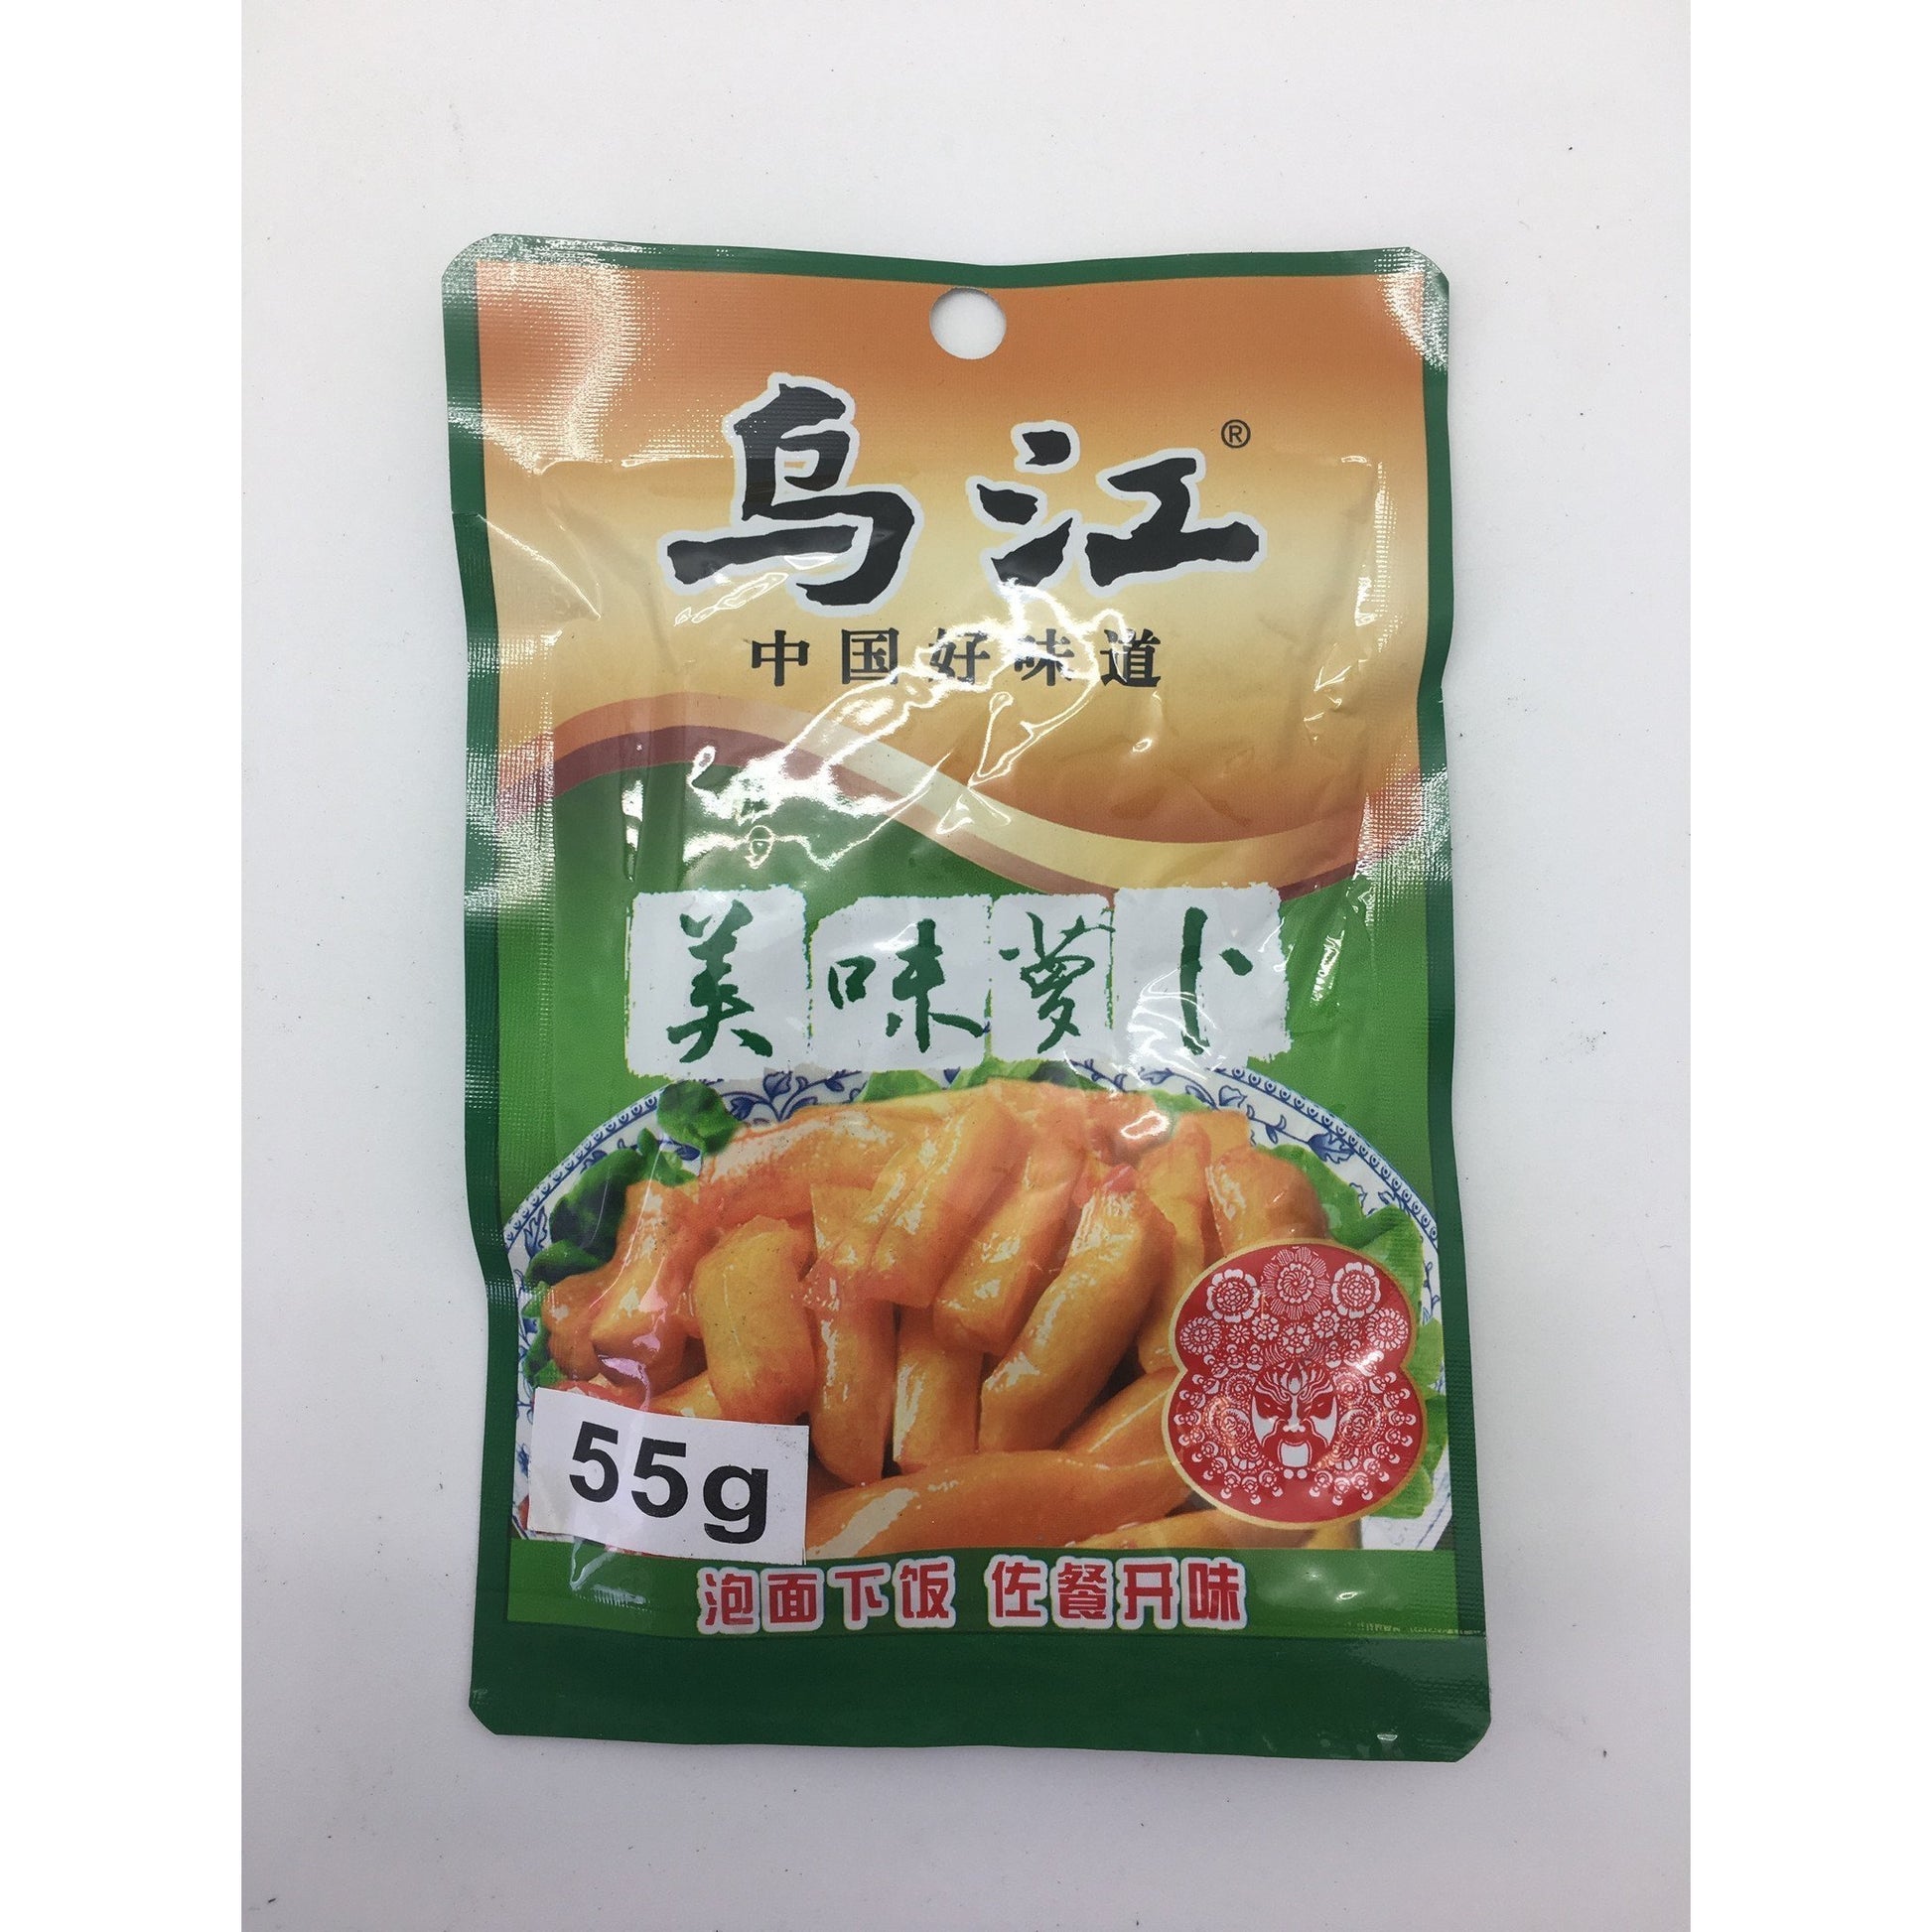 D144M Wu Jiang brand -   Preserved Radish 55g - 100 bags / 1CTN - New Eastland Pty Ltd - Asian food wholesalers